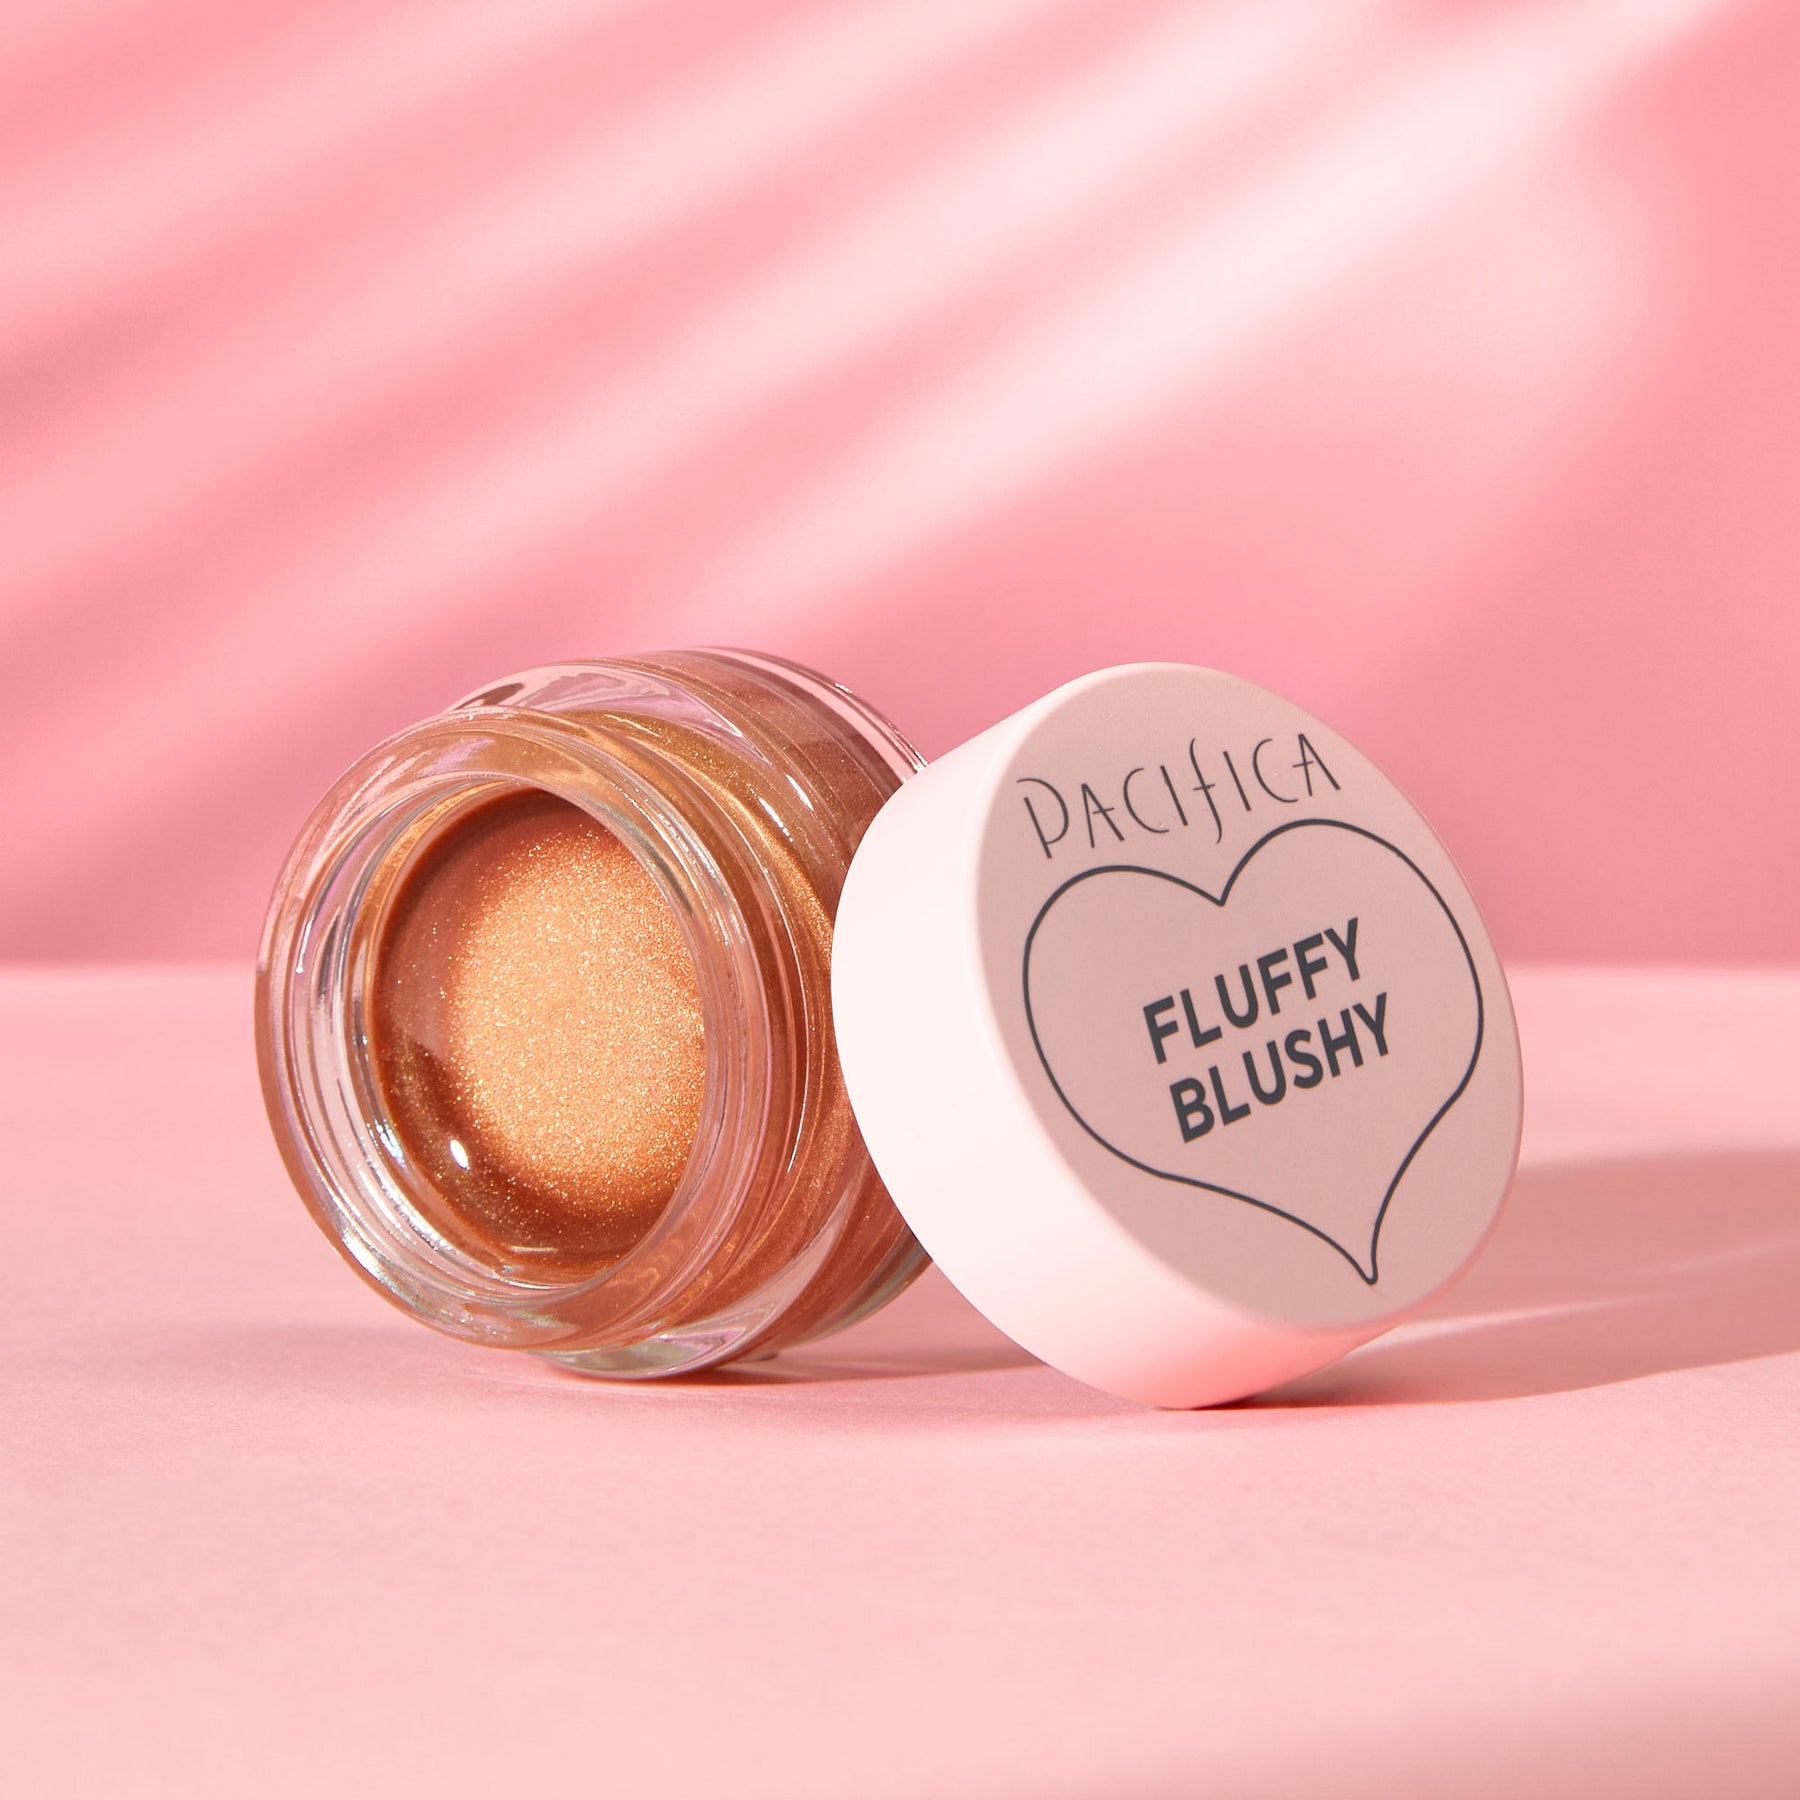 Fluffy Blushy - Makeup - Pacifica Beauty